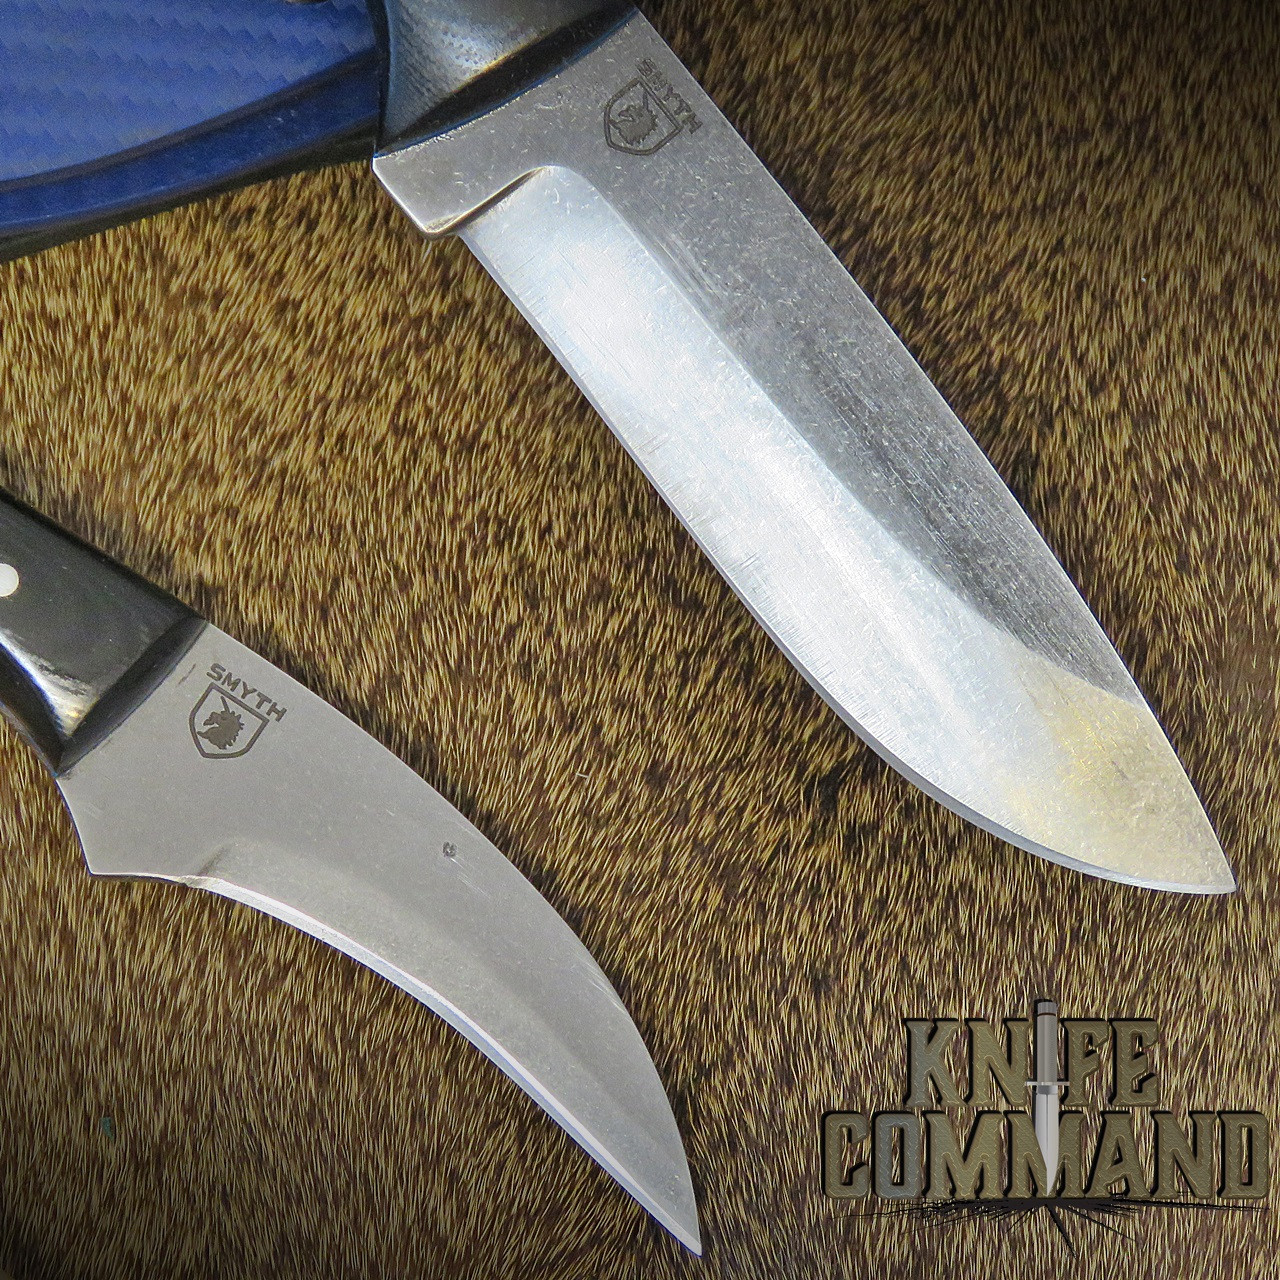 Paddy Smyth Knives Custom Stalker's Claw/ Pro Stalker Full Stalking Combo Hunting Knives, Black G-10 Blue Sheath Blueline